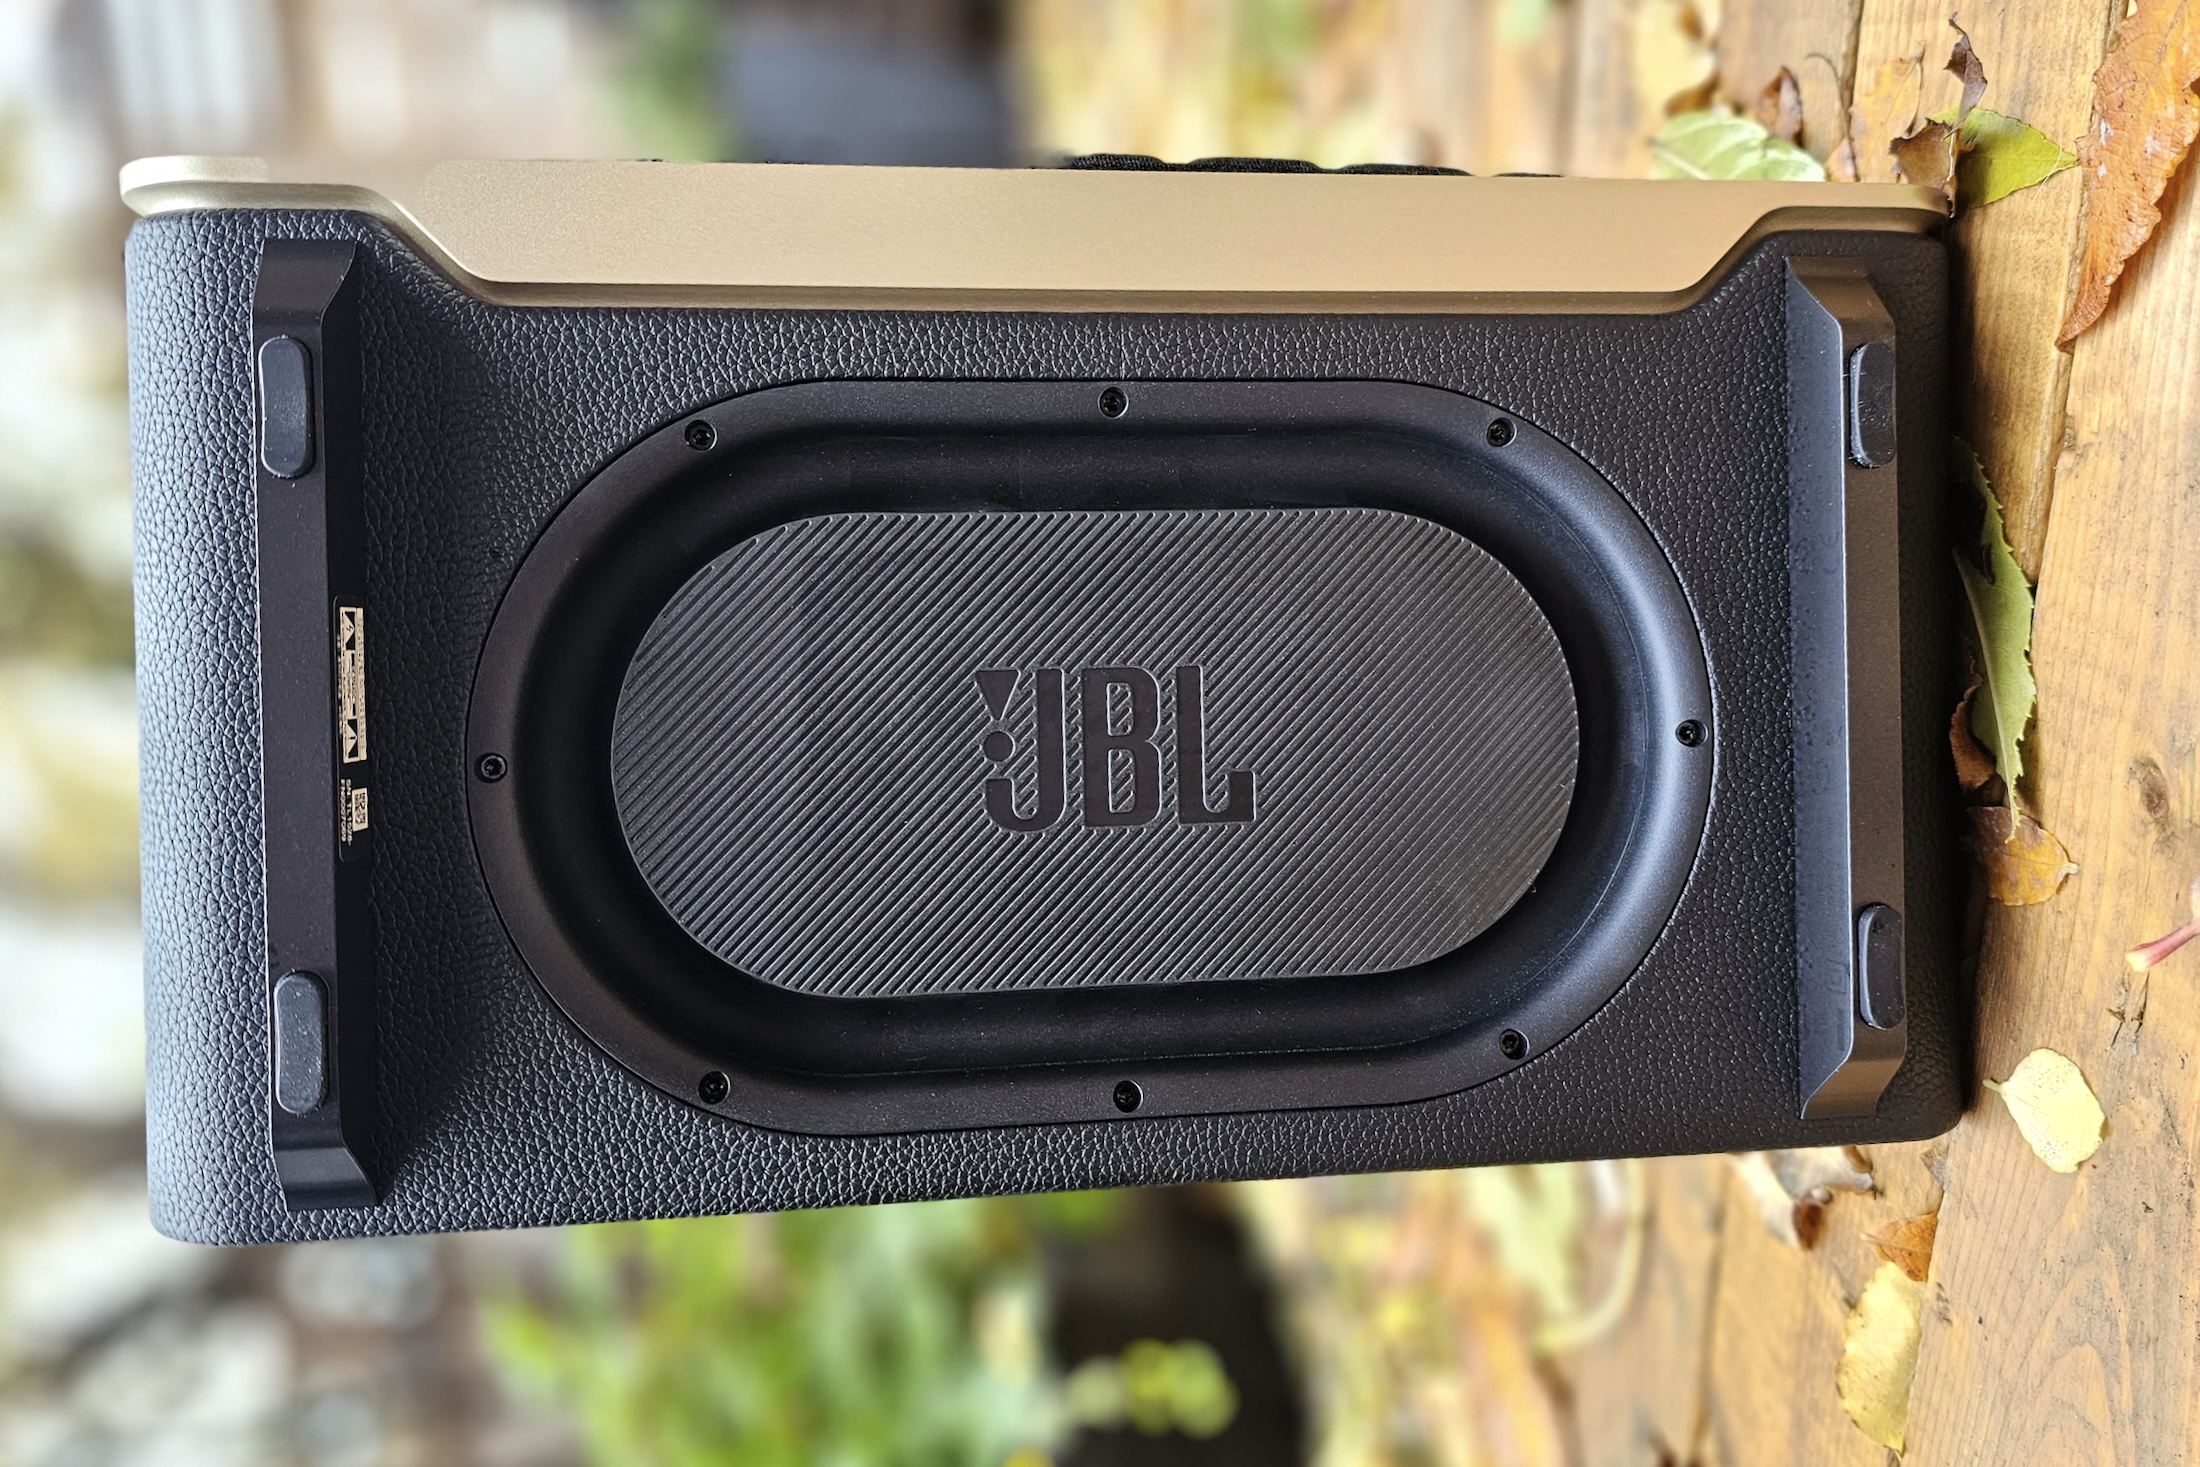 JBL | Trends Digital review: Portable style 300 power, retro Authentics